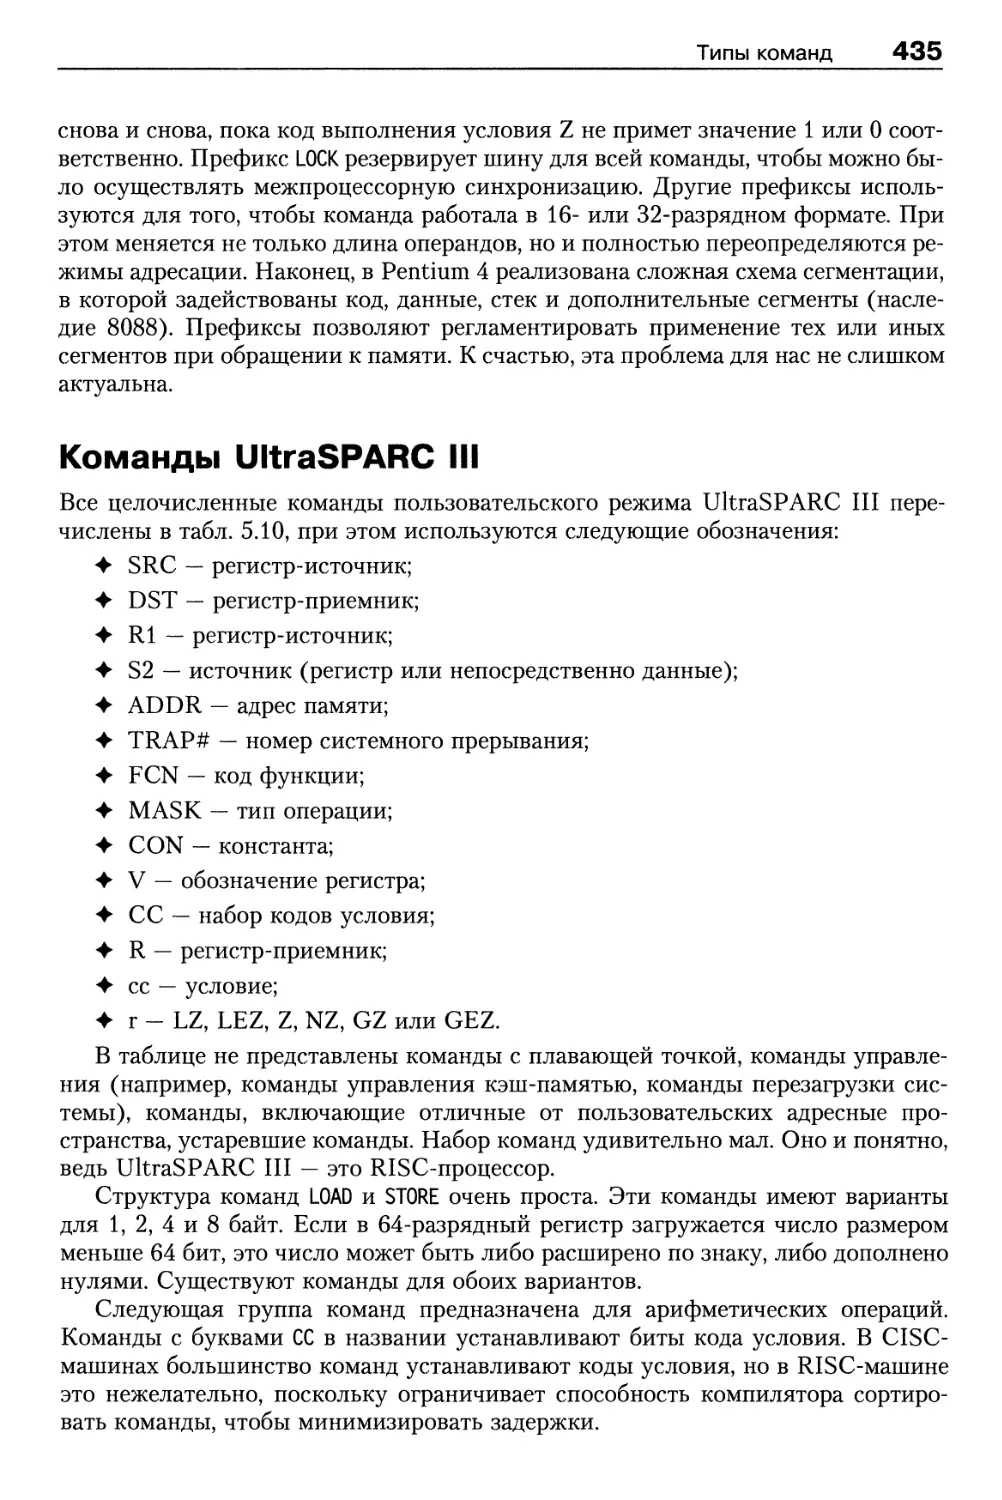 Команды UltraSPARC III